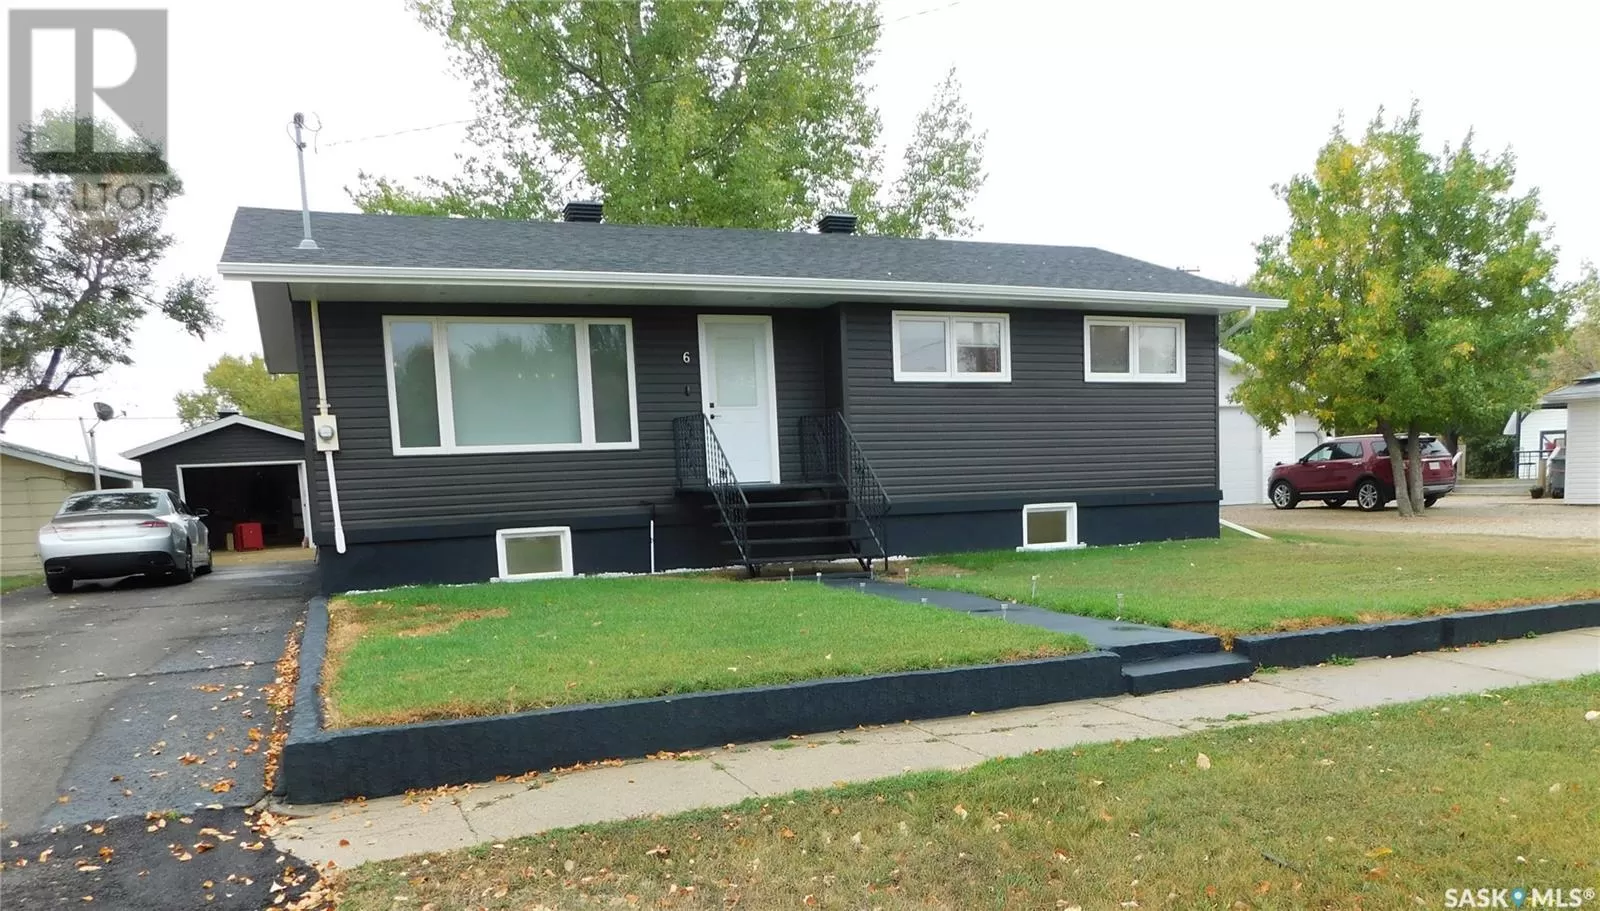 House for rent: 6 H Avenue, Willow Bunch, Saskatchewan S0H 4K0